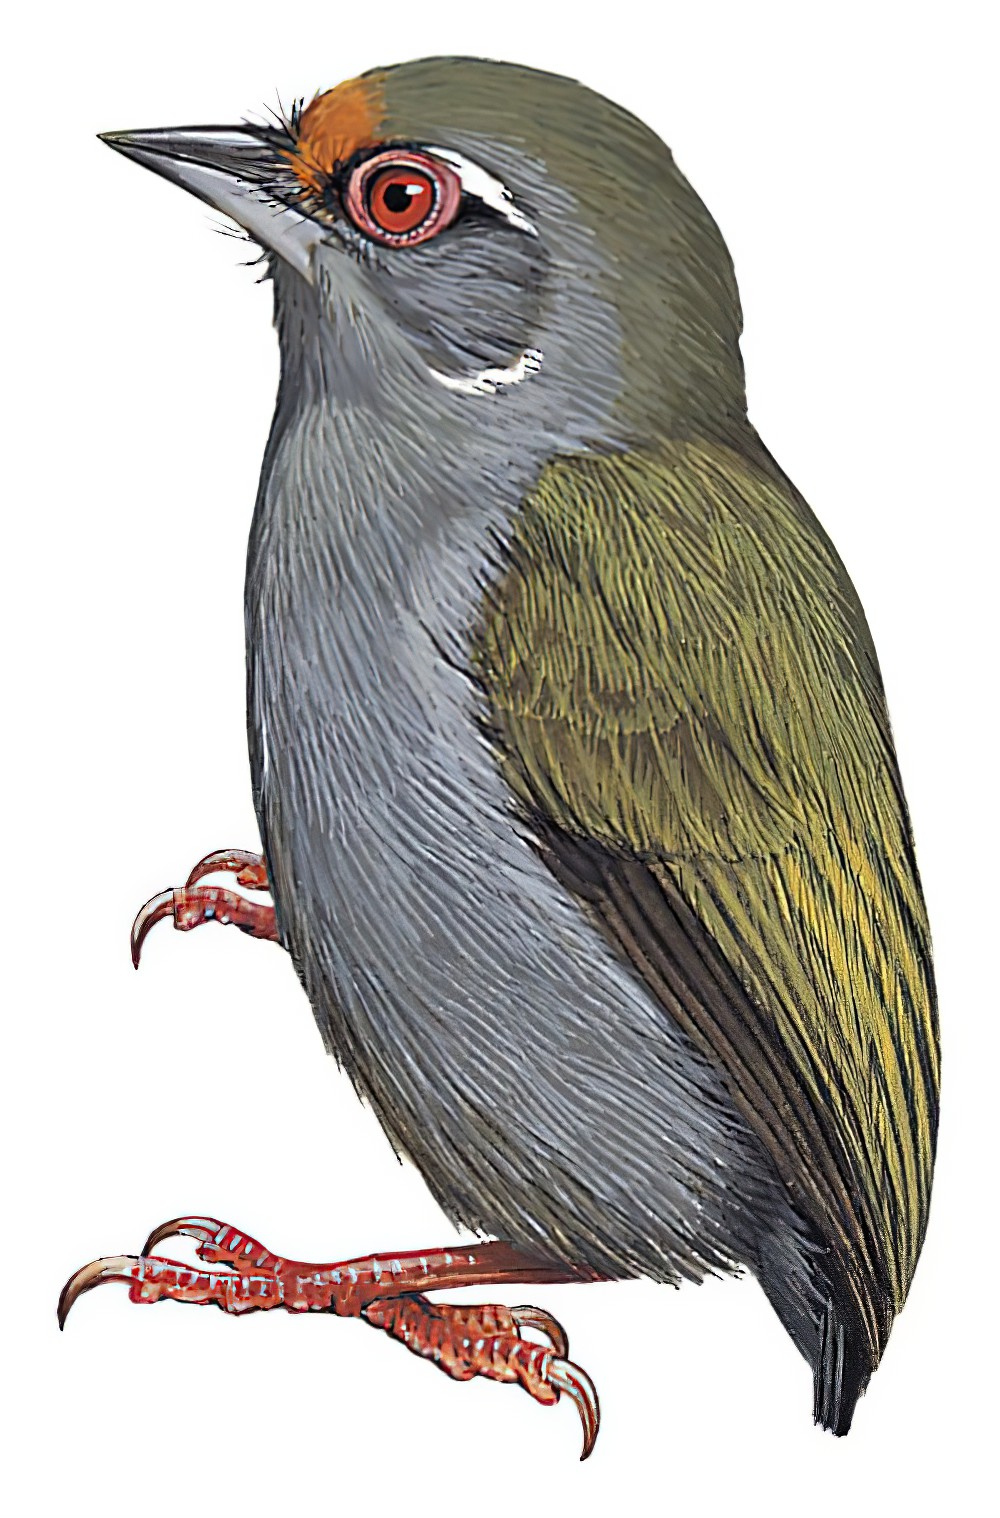 非洲姬啄木鸟 / African Piculet / Sasia africana